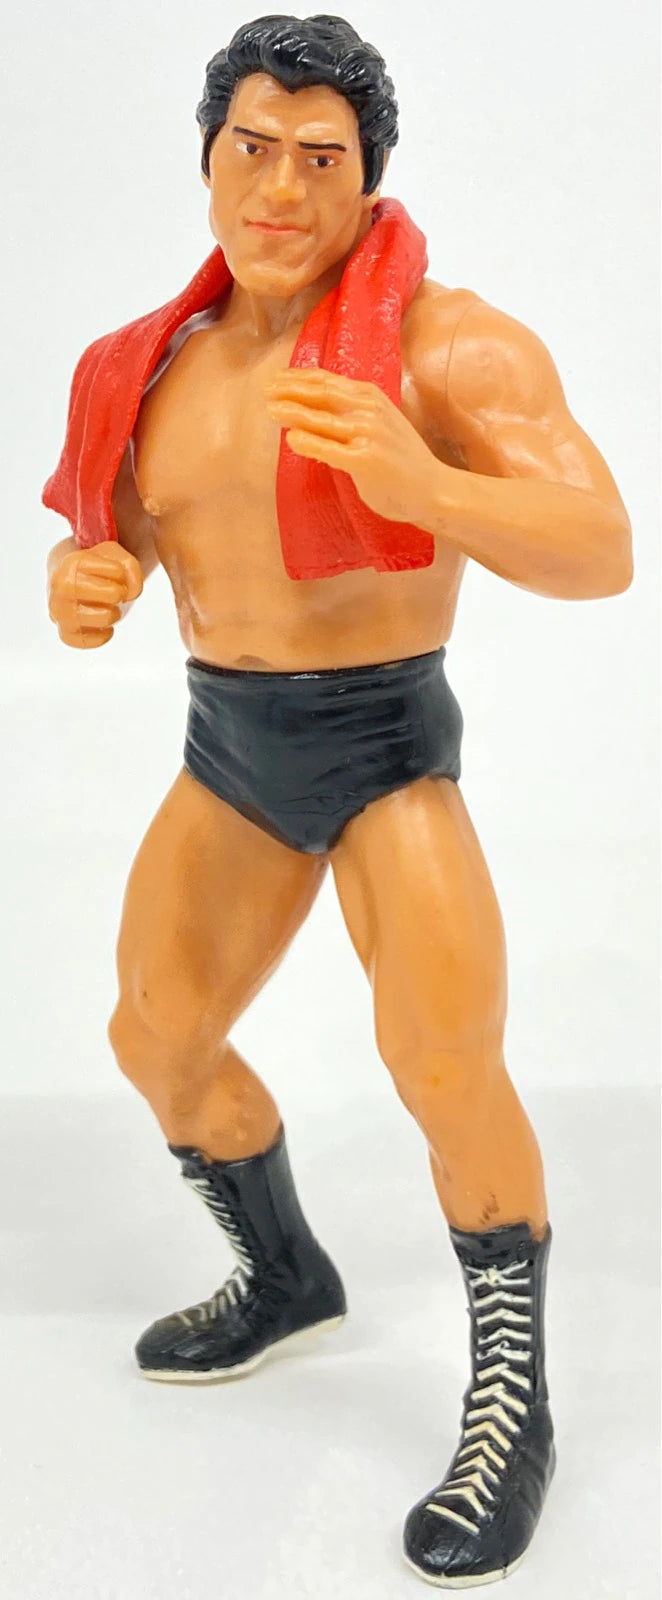 1998 NJPW CharaPro Super Star Figure Collection Series 6 Antonio Inoki [With Red Towel]